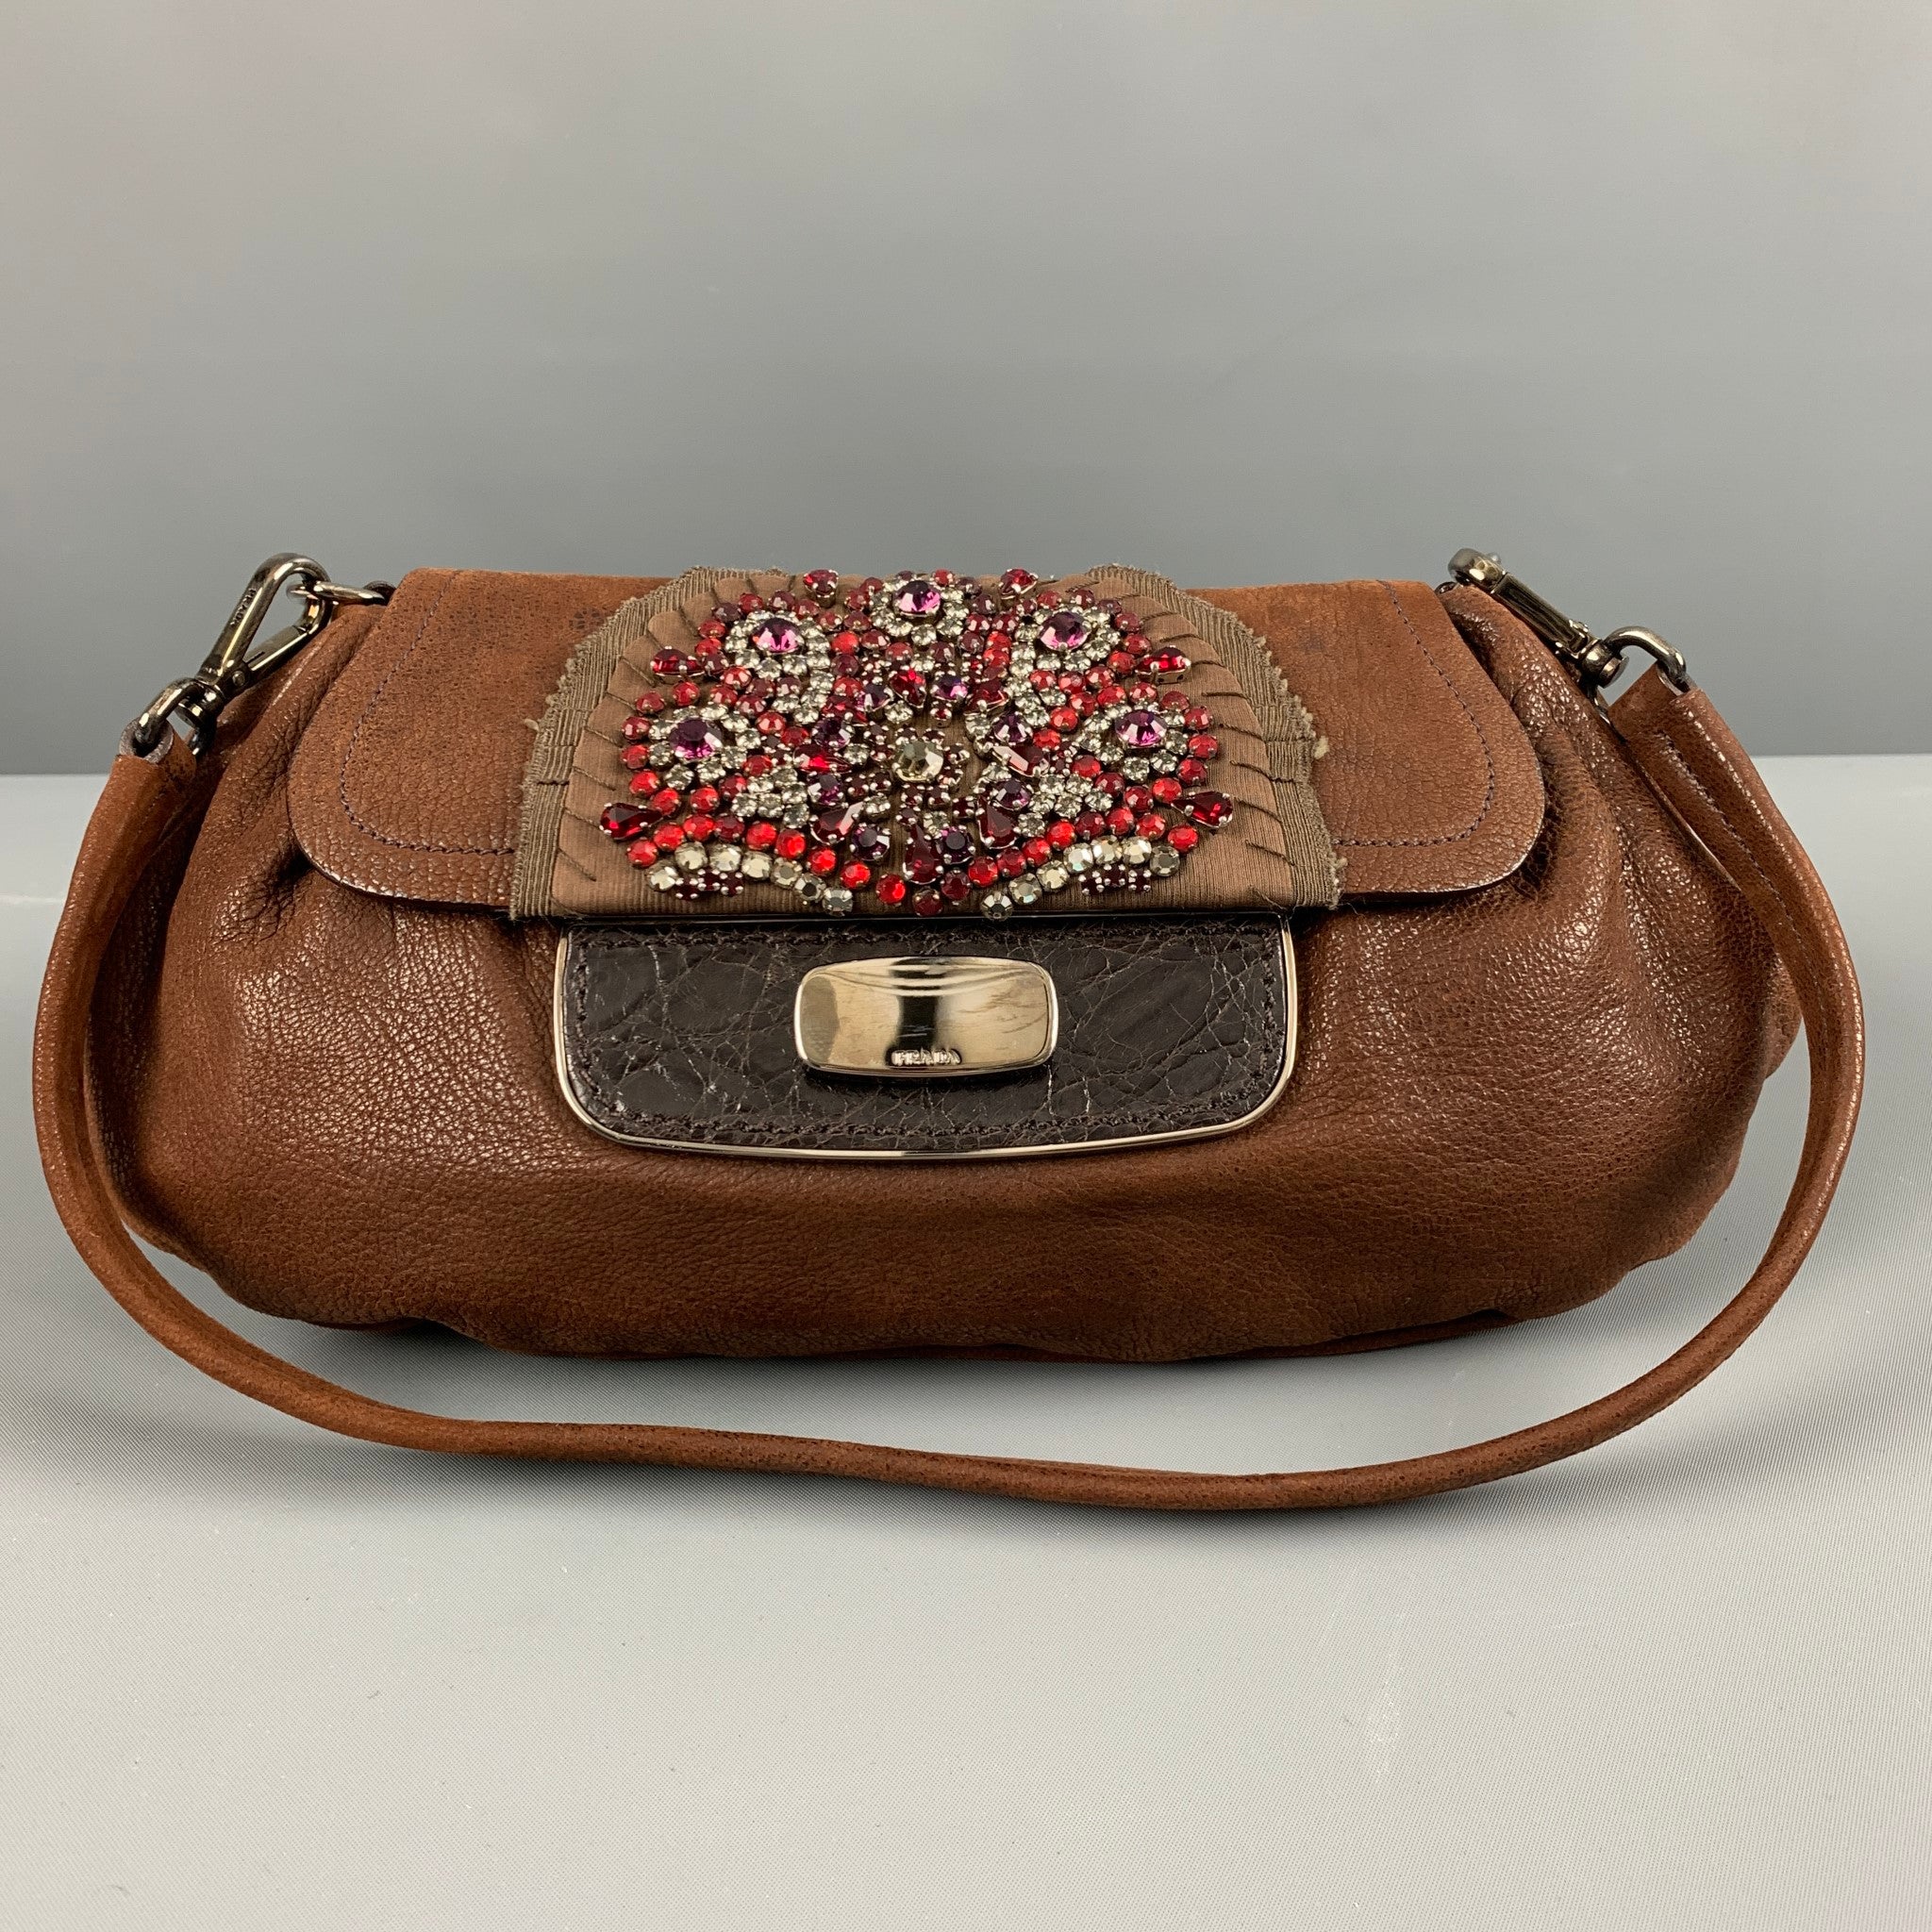 Ralph Lauren Collection - Authenticated Handbag - Leather Brown Plain for Women, Good Condition